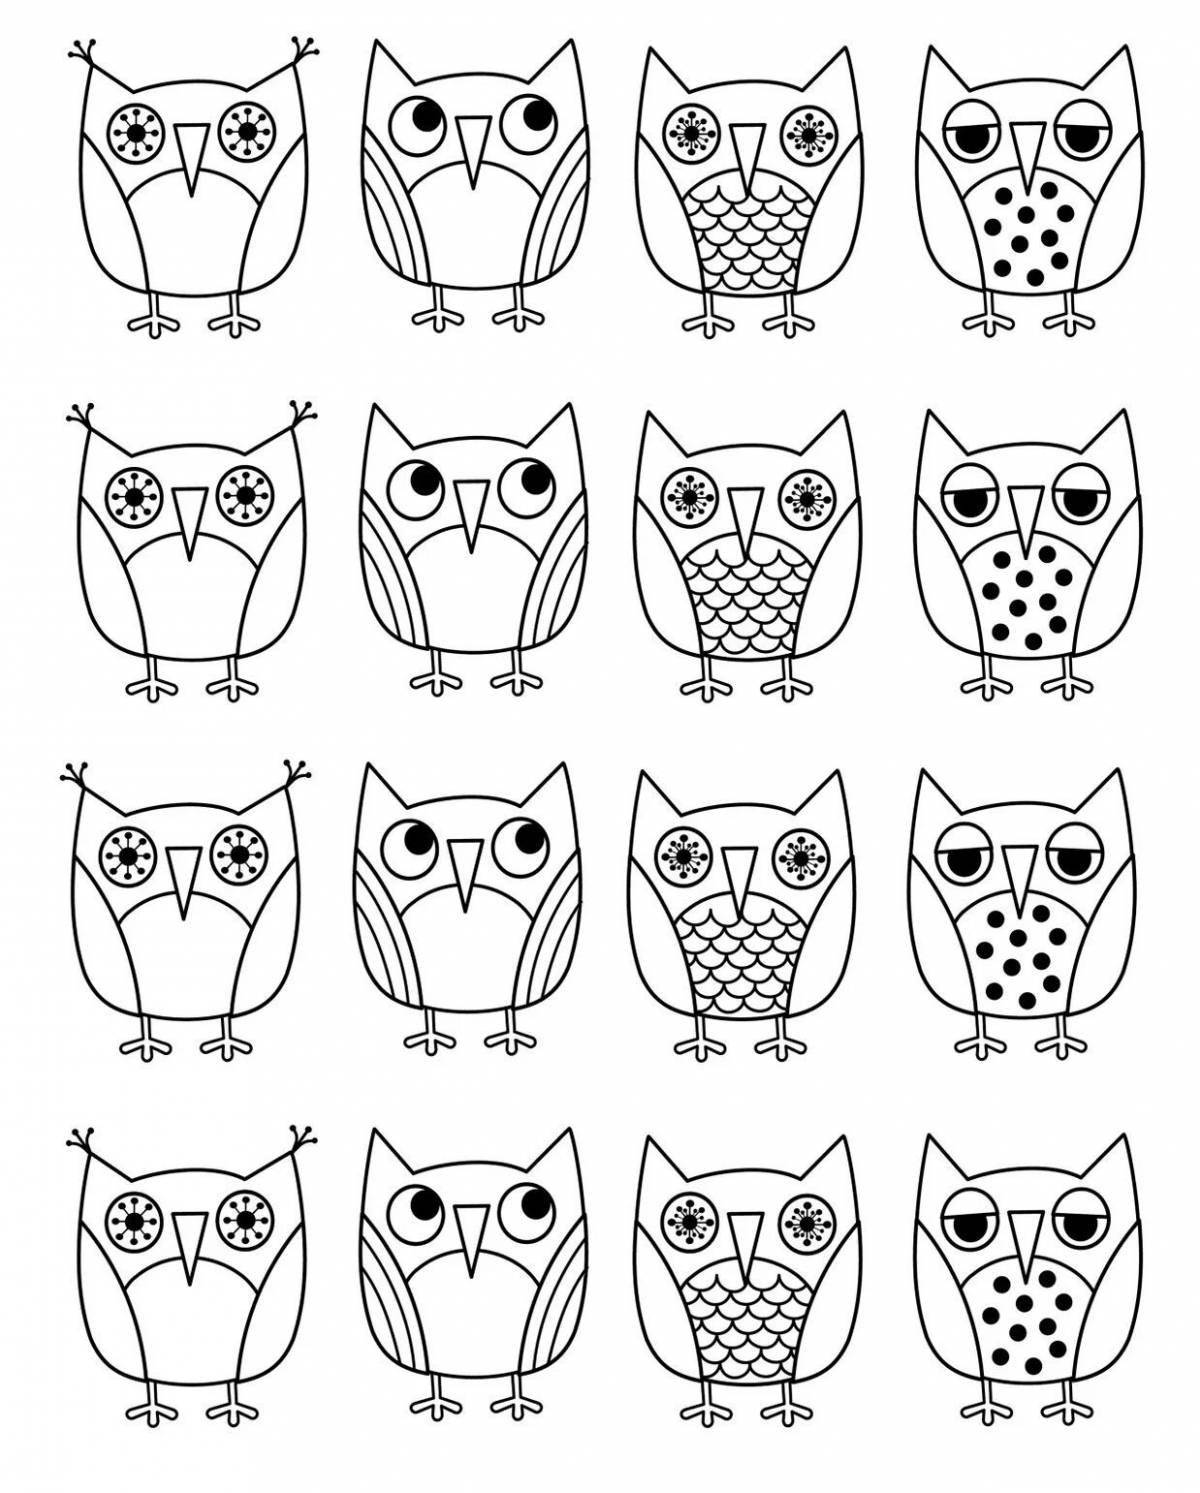 Adorable owl anti-stress coloring book